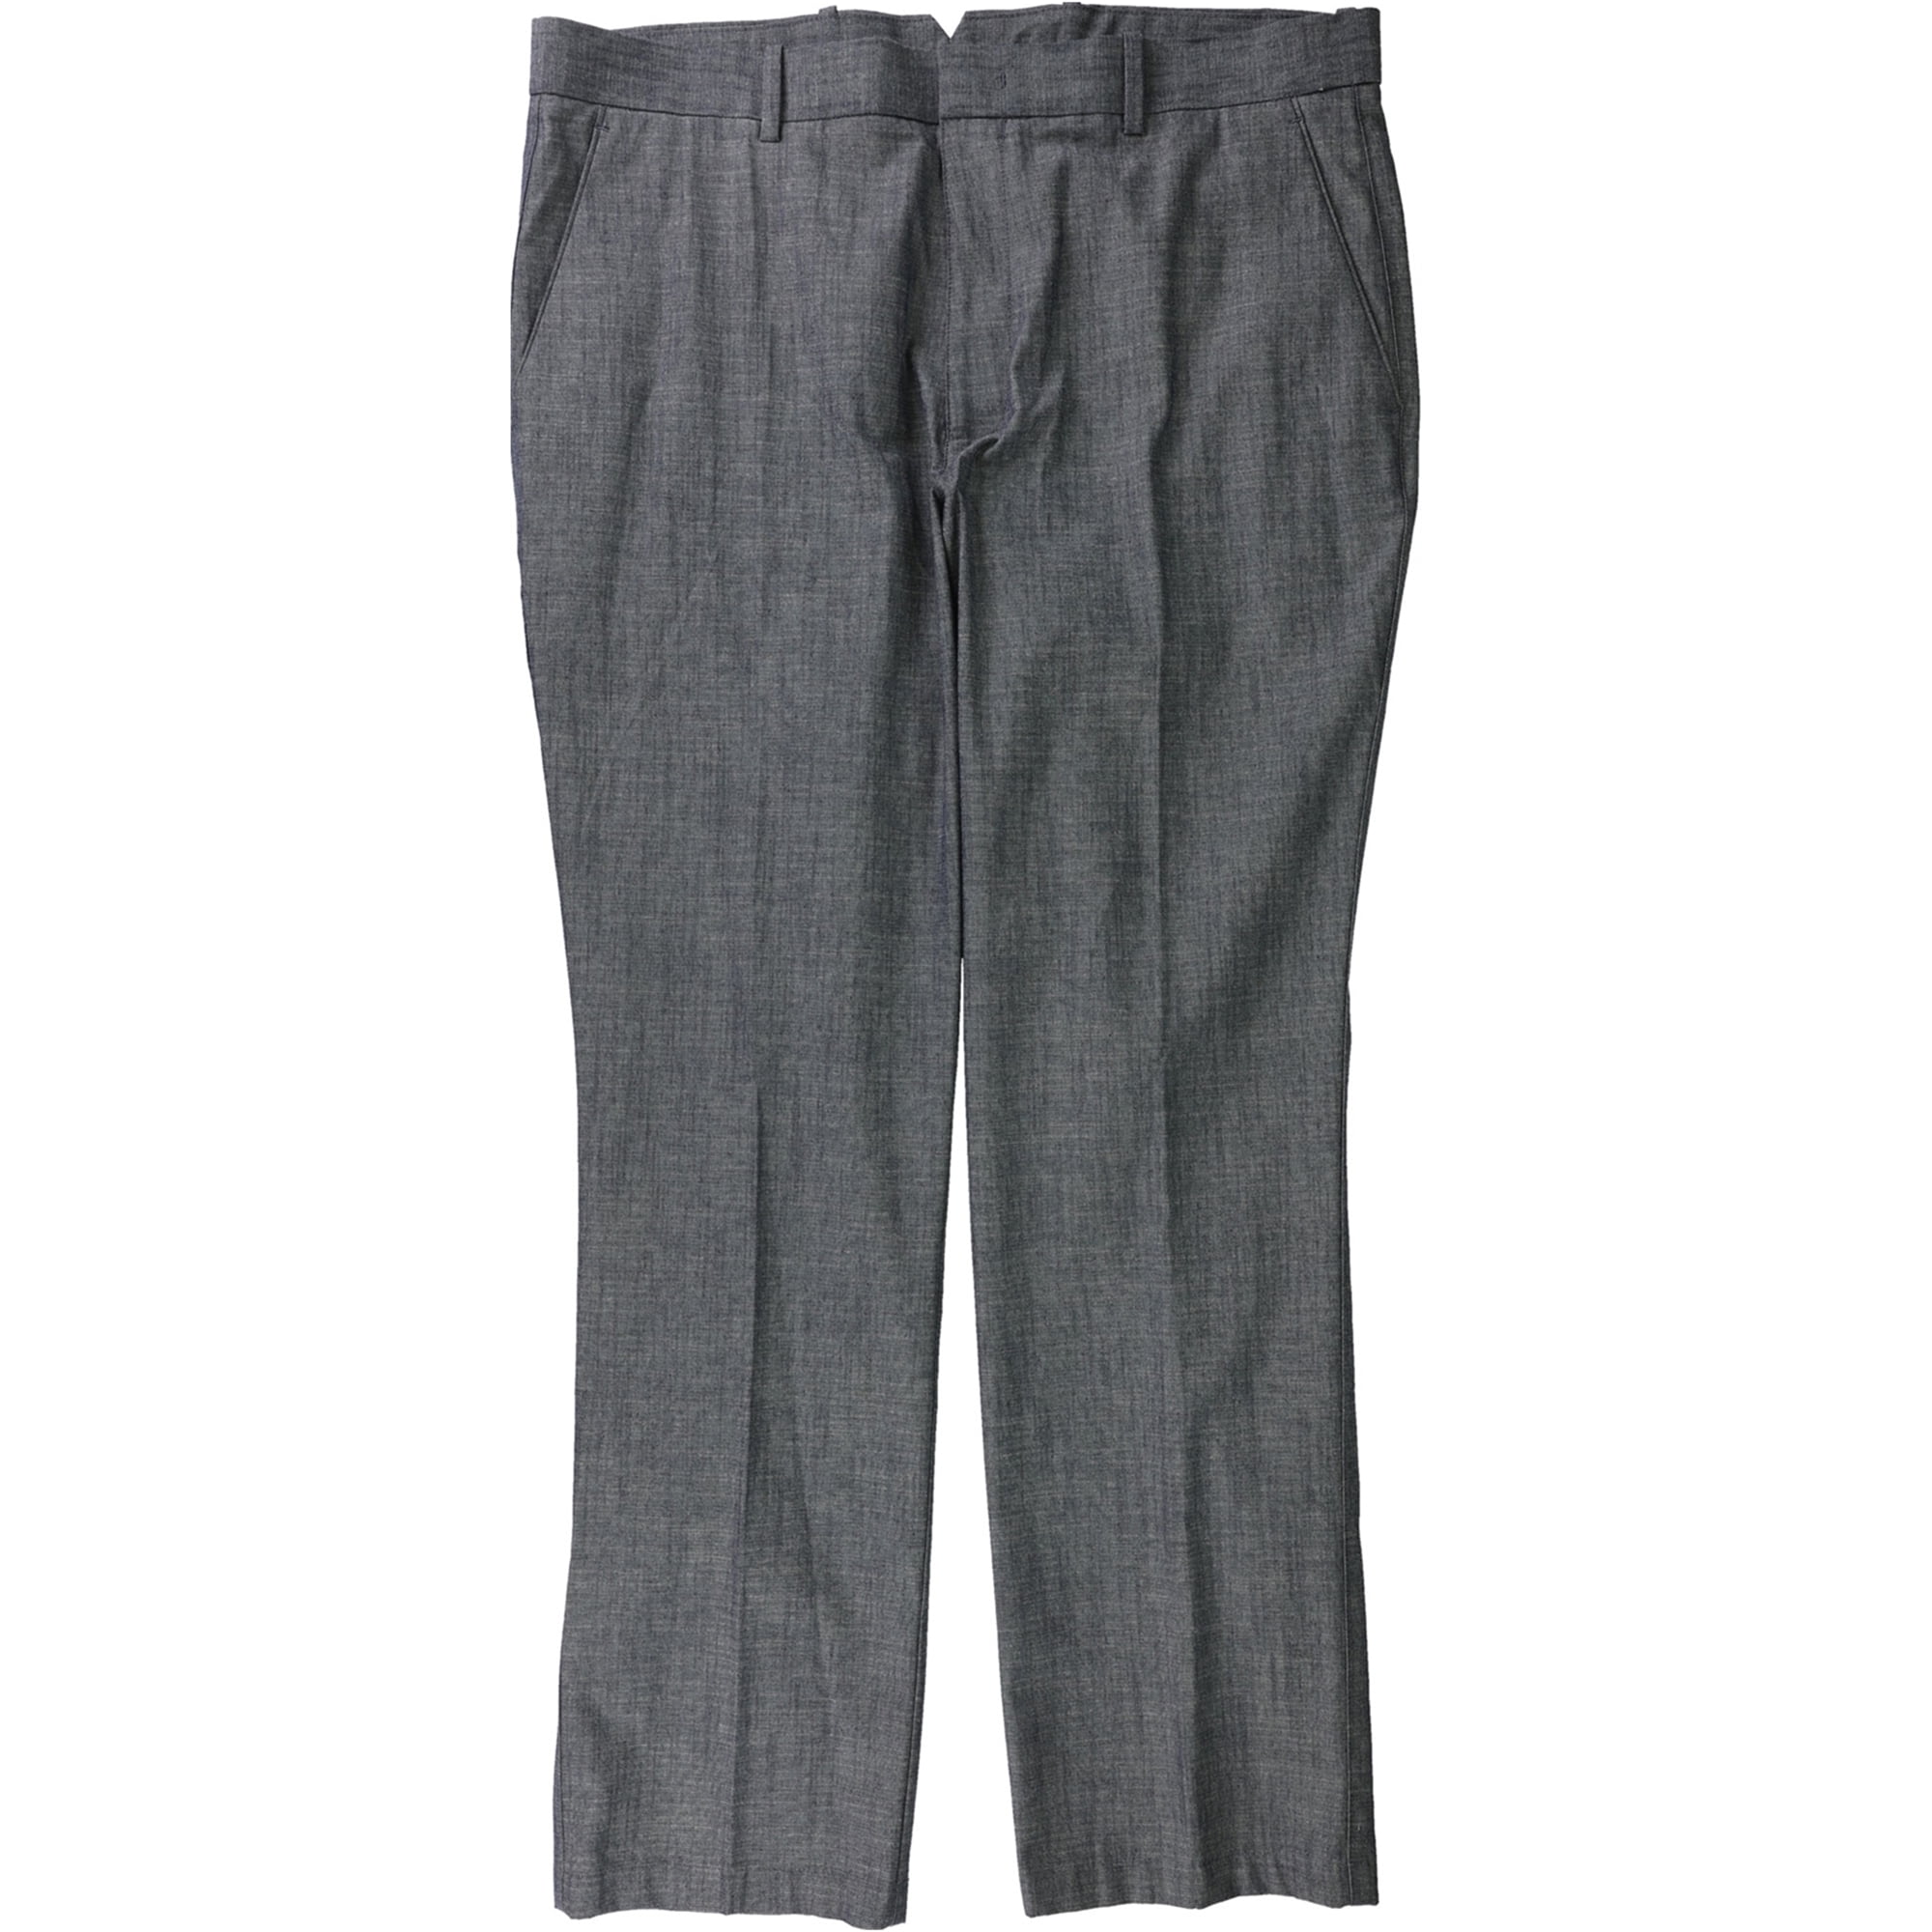 Tasso Elba - Tasso Elba Mens Linen Casual Trouser Pants - Walmart.com ...